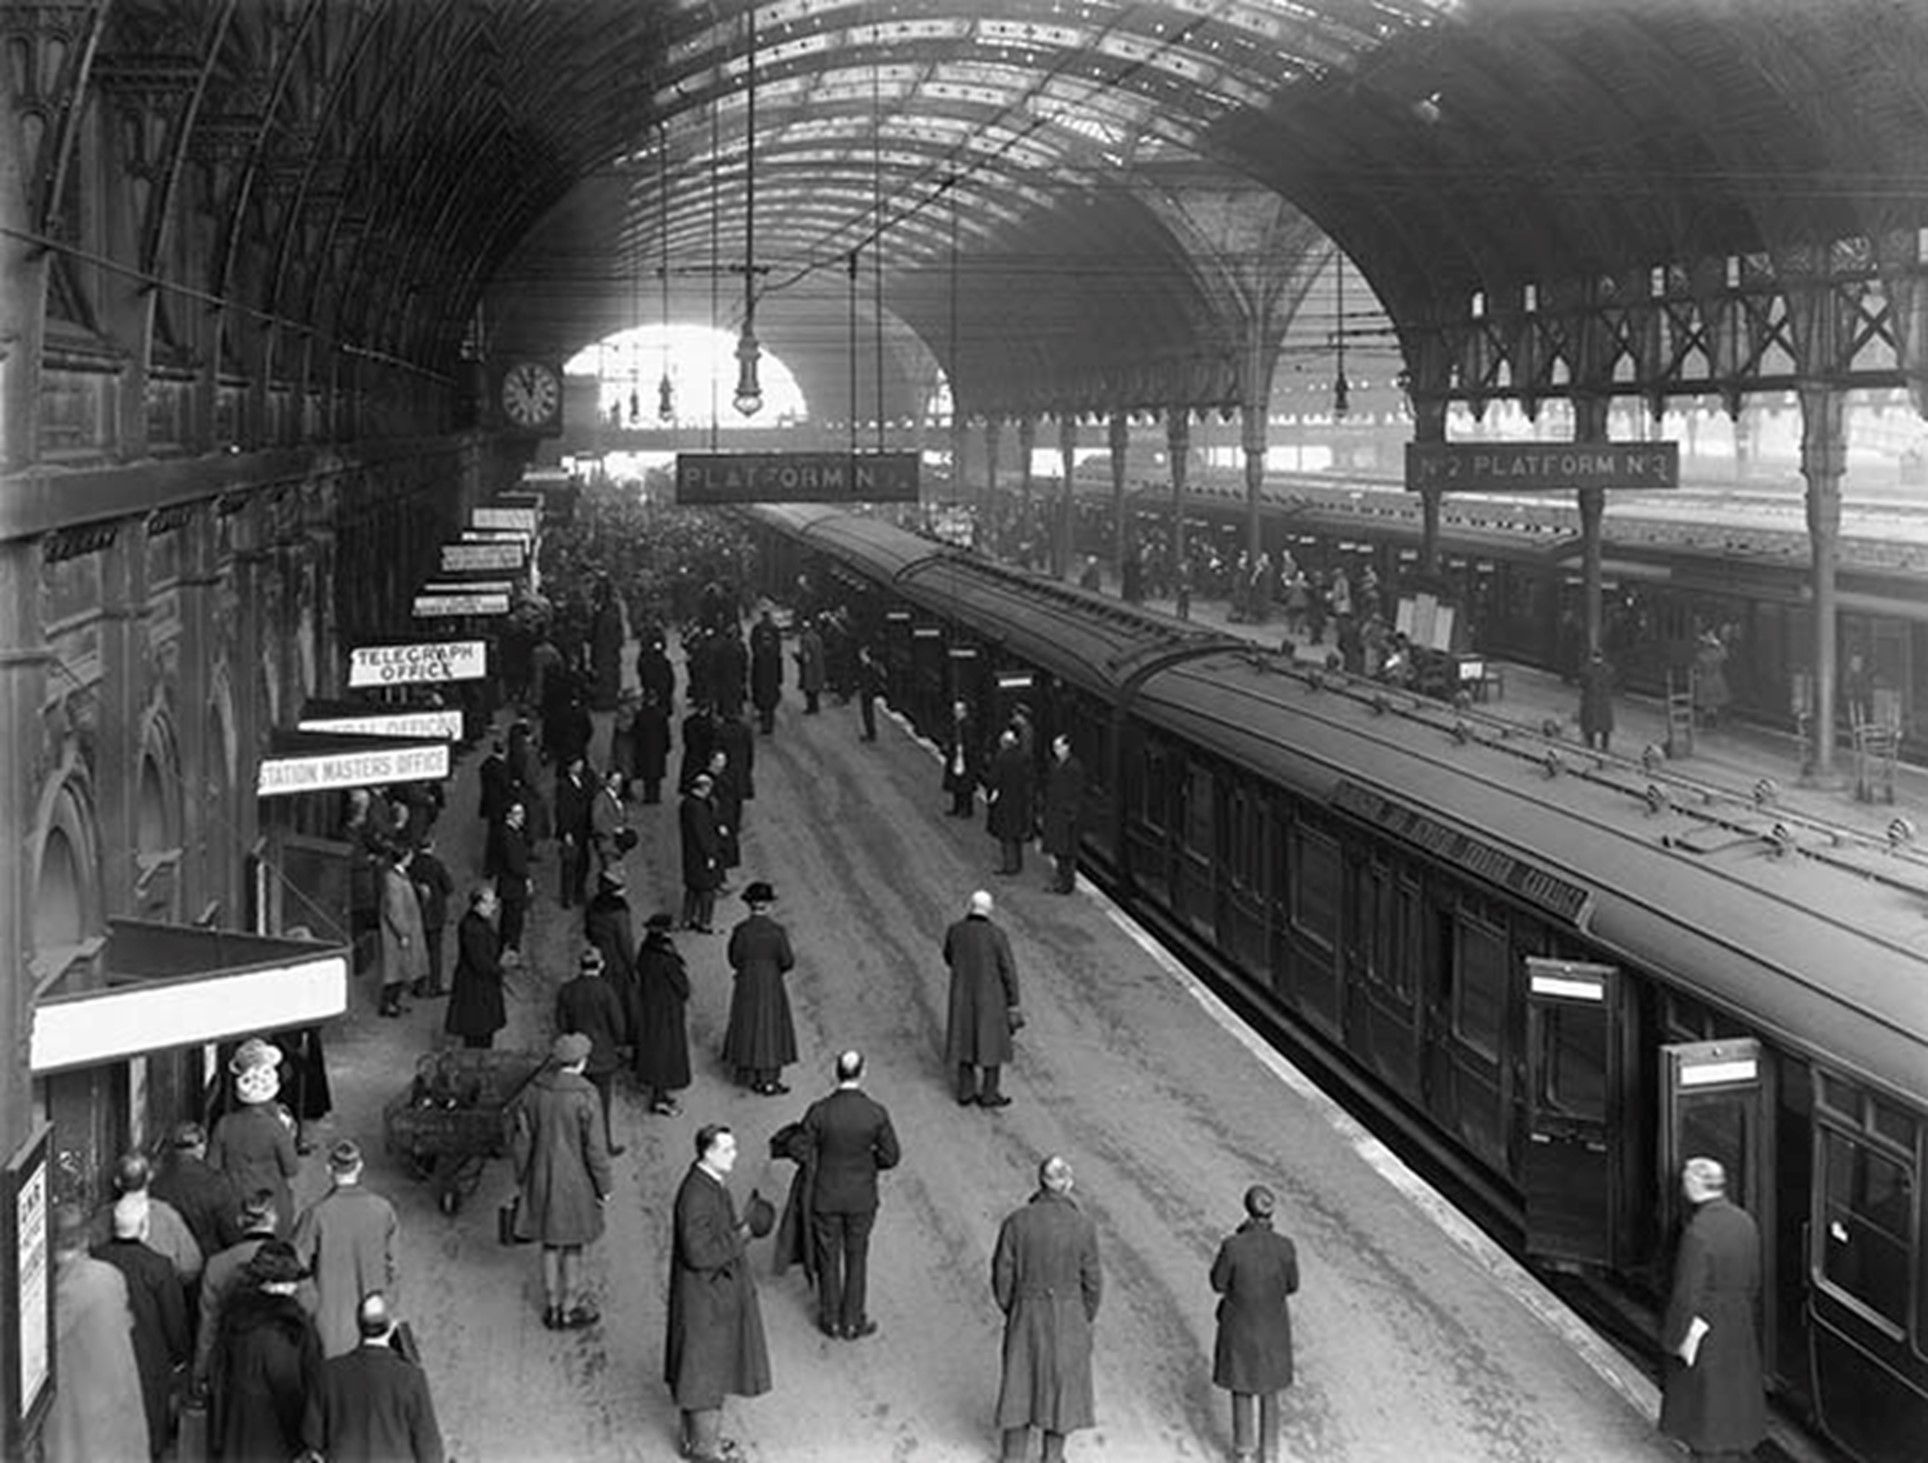 Paddington Station (estación de ferrocarril de Londres) vinculada a la obra literaria de Conan Doyle.